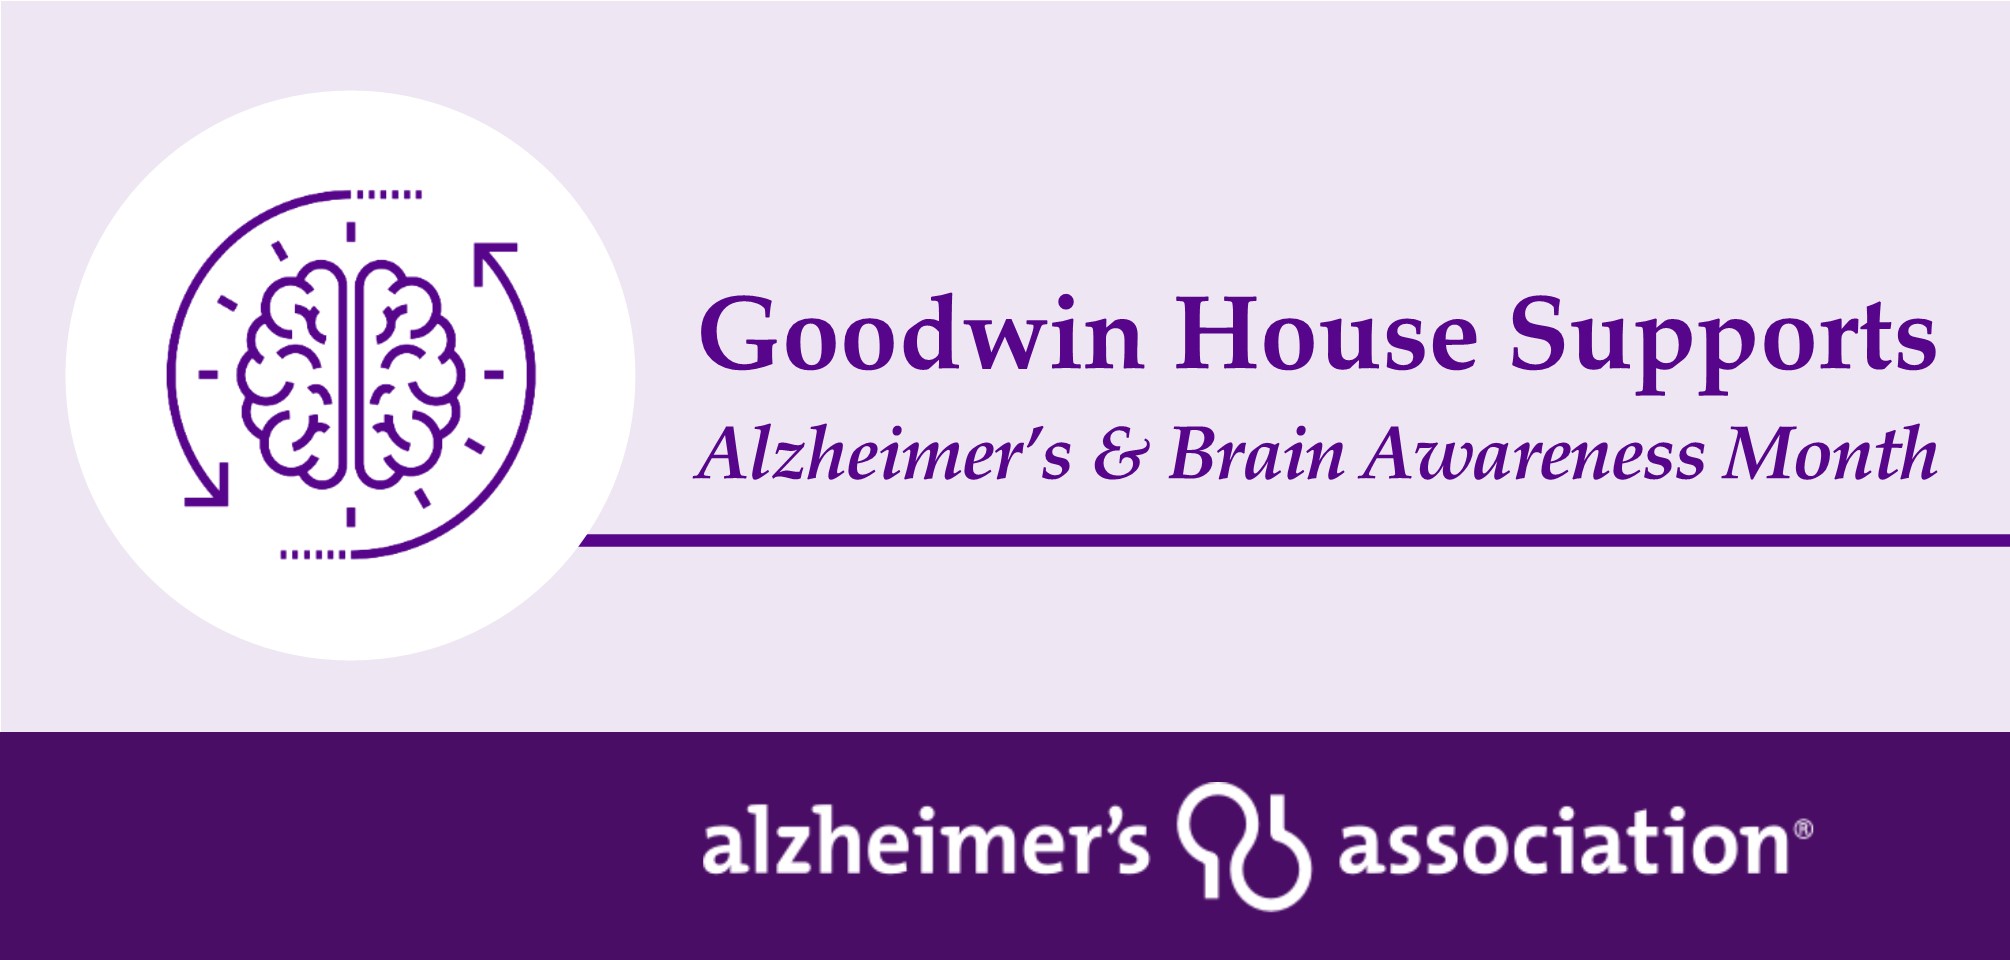 Goodwin House supports Alzheimer's and Brain Awareness Month